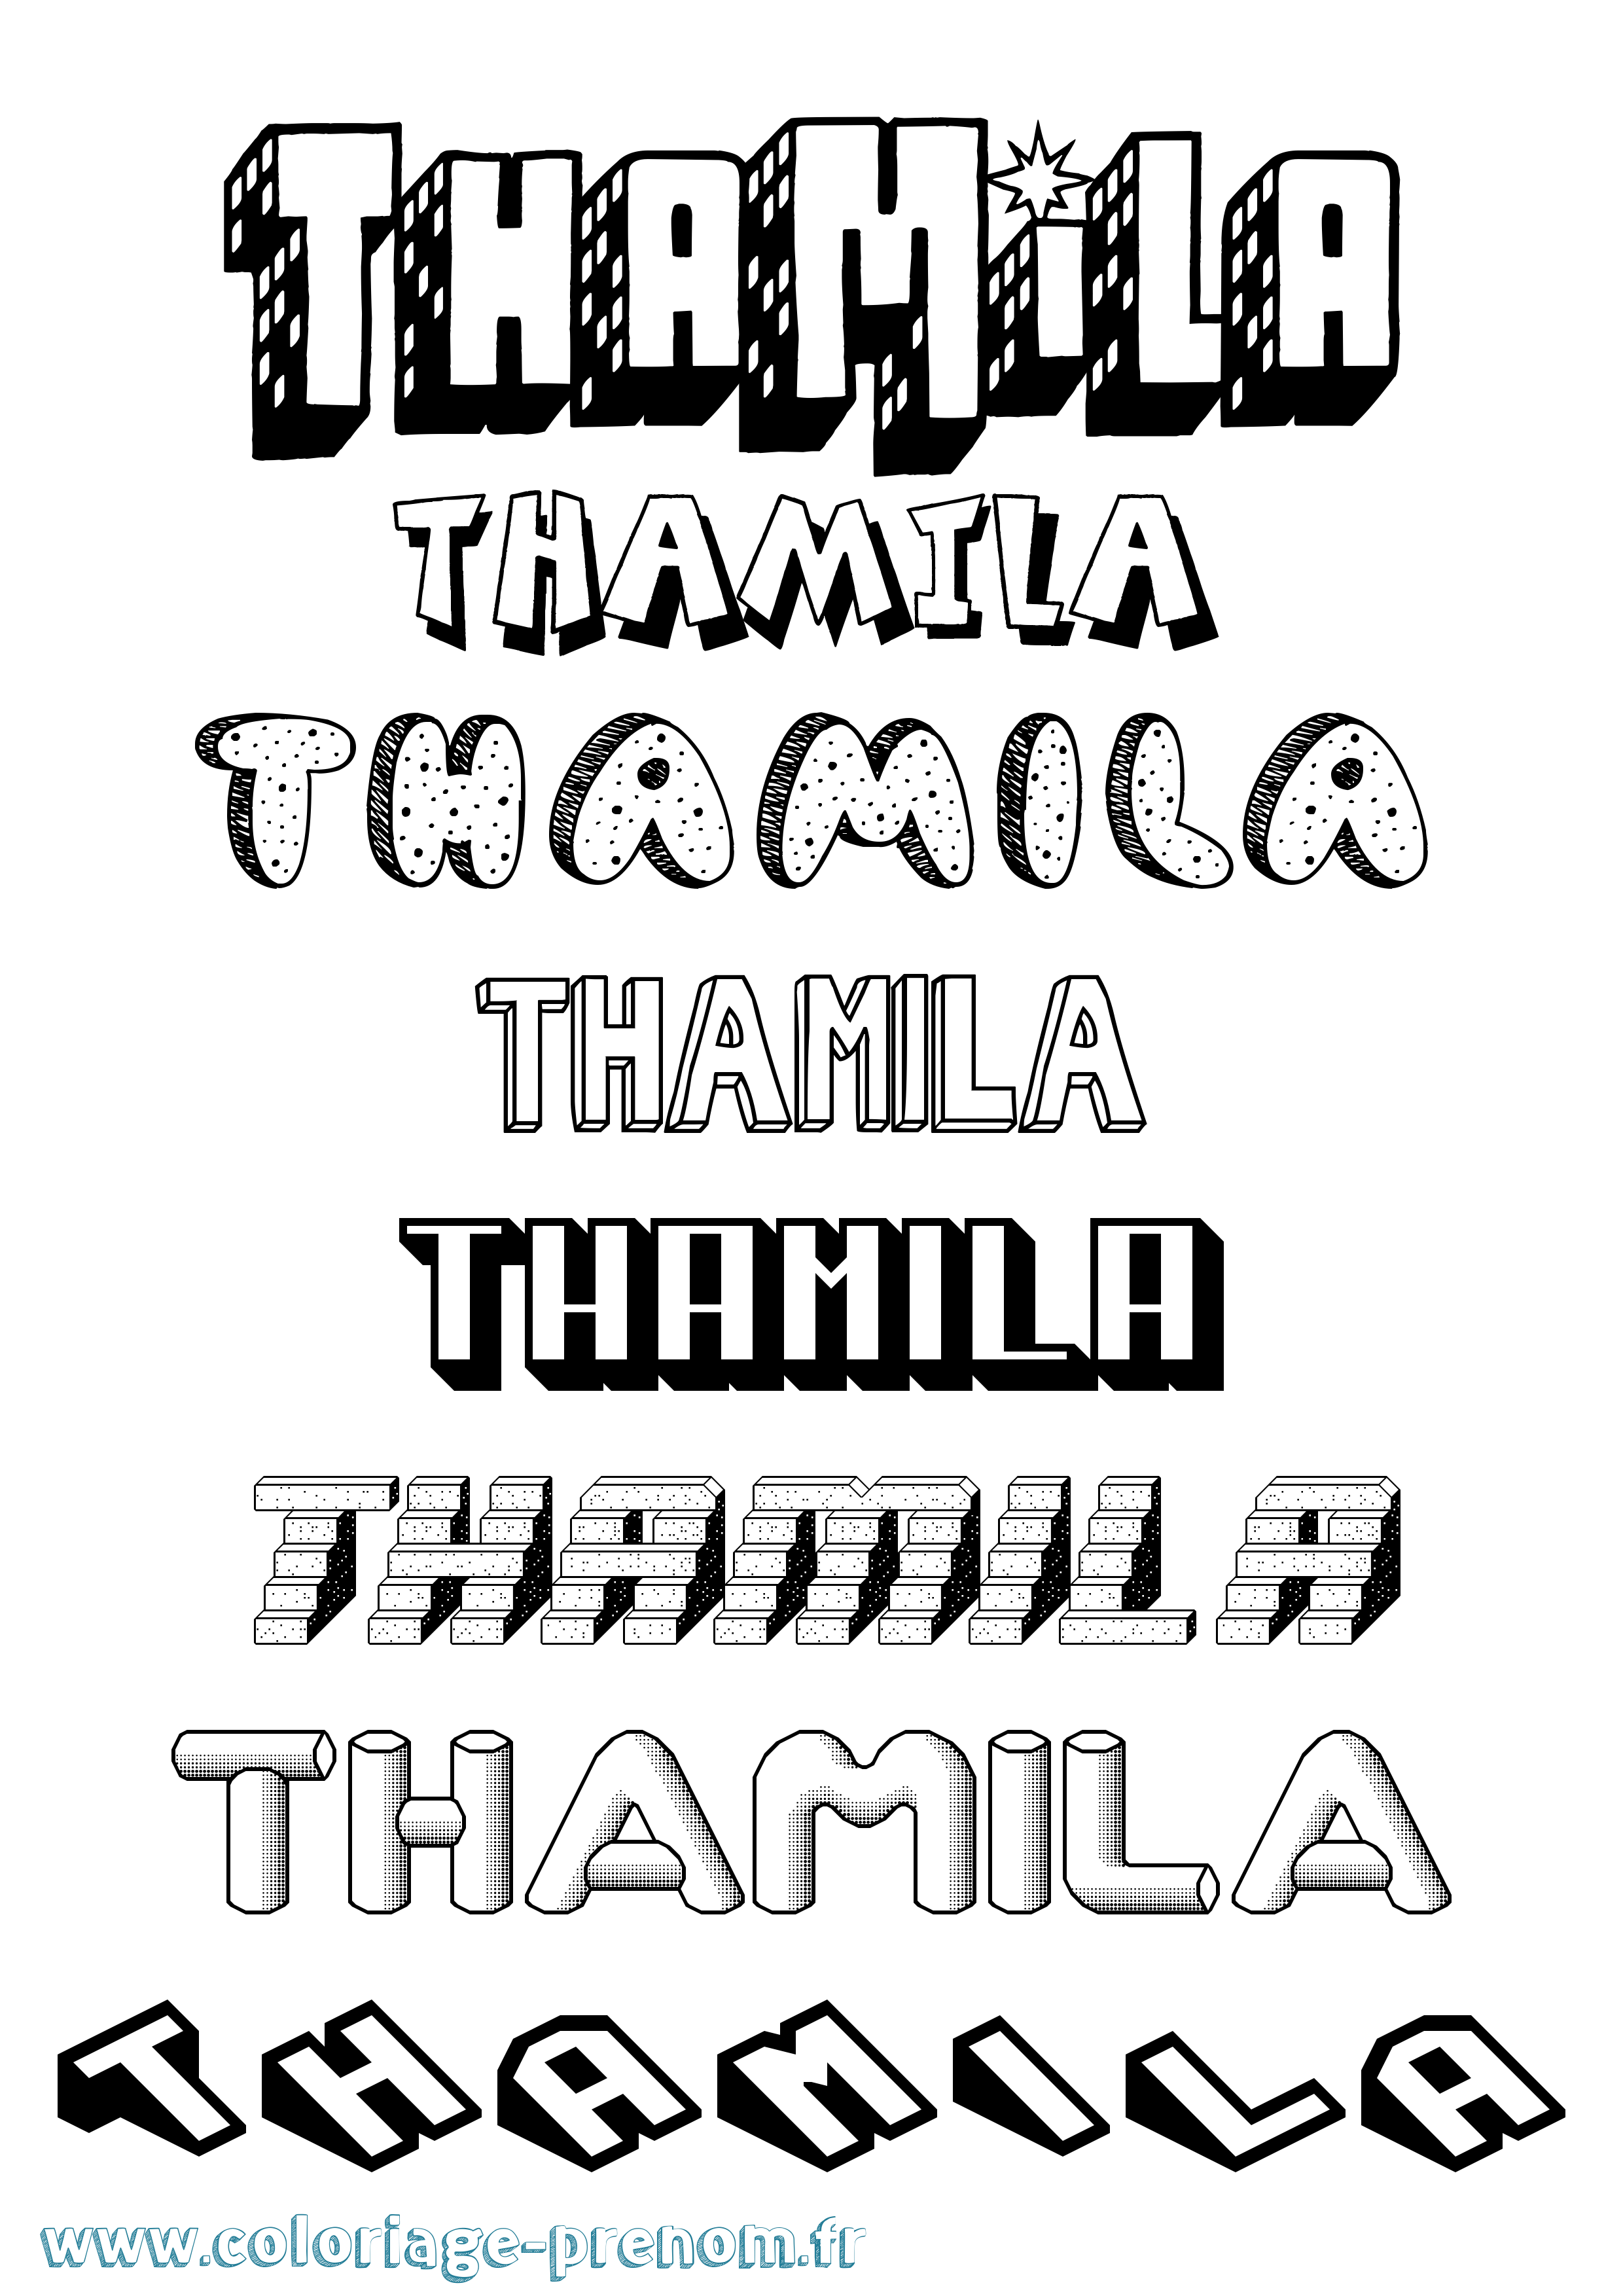 Coloriage prénom Thamila Effet 3D